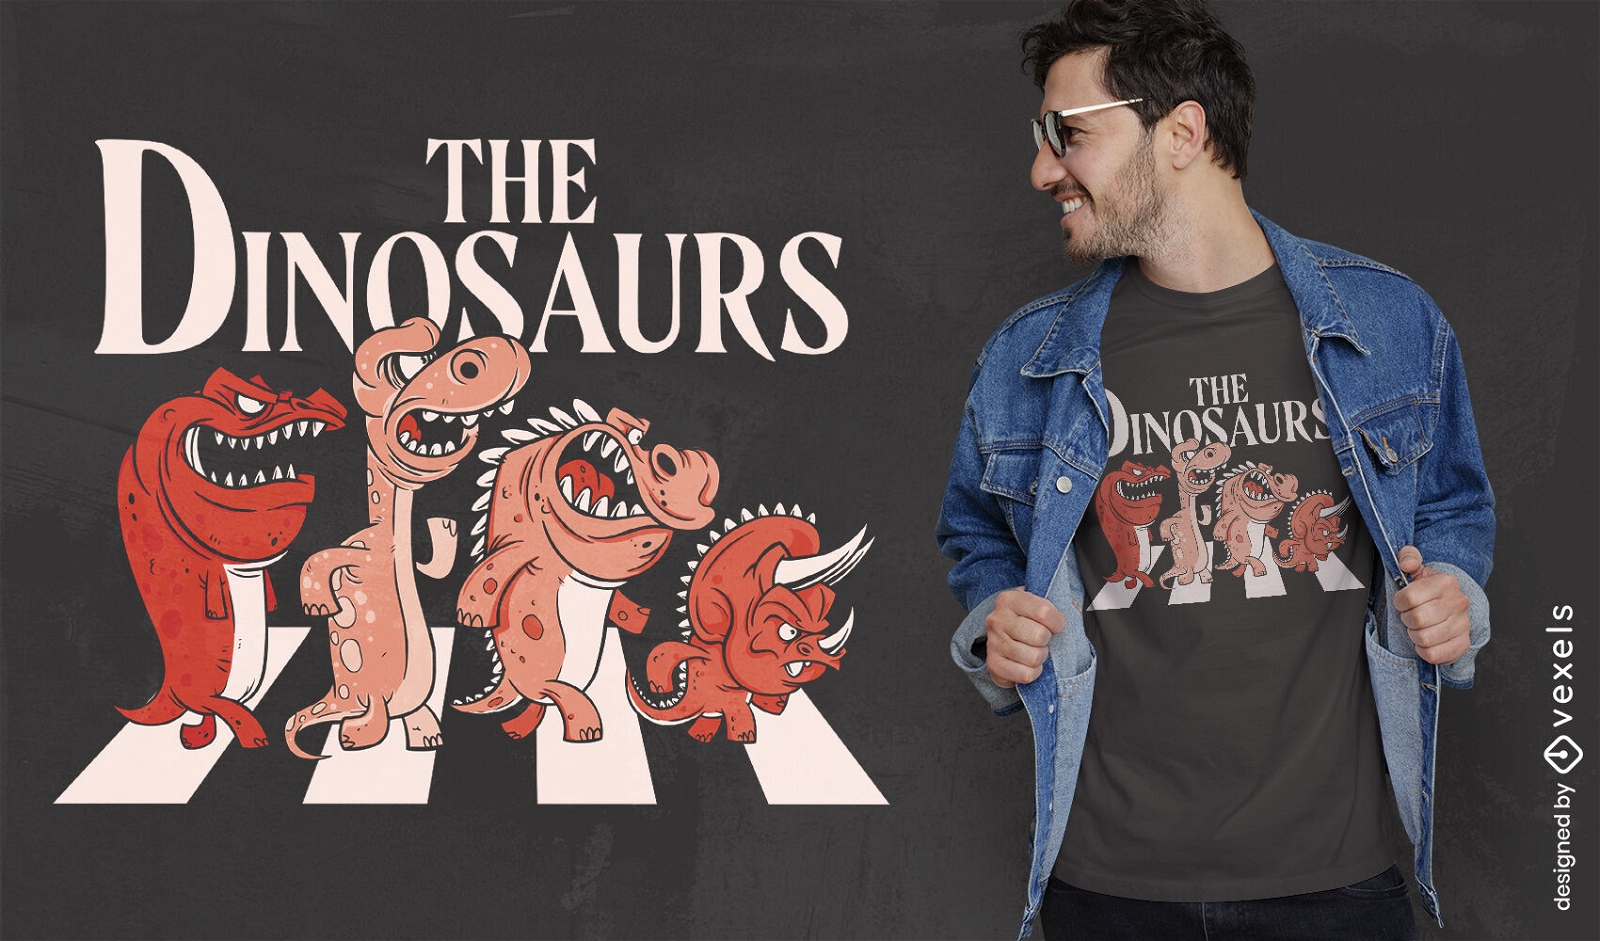 Dinosaurs Abbey Road parody t-shirt design